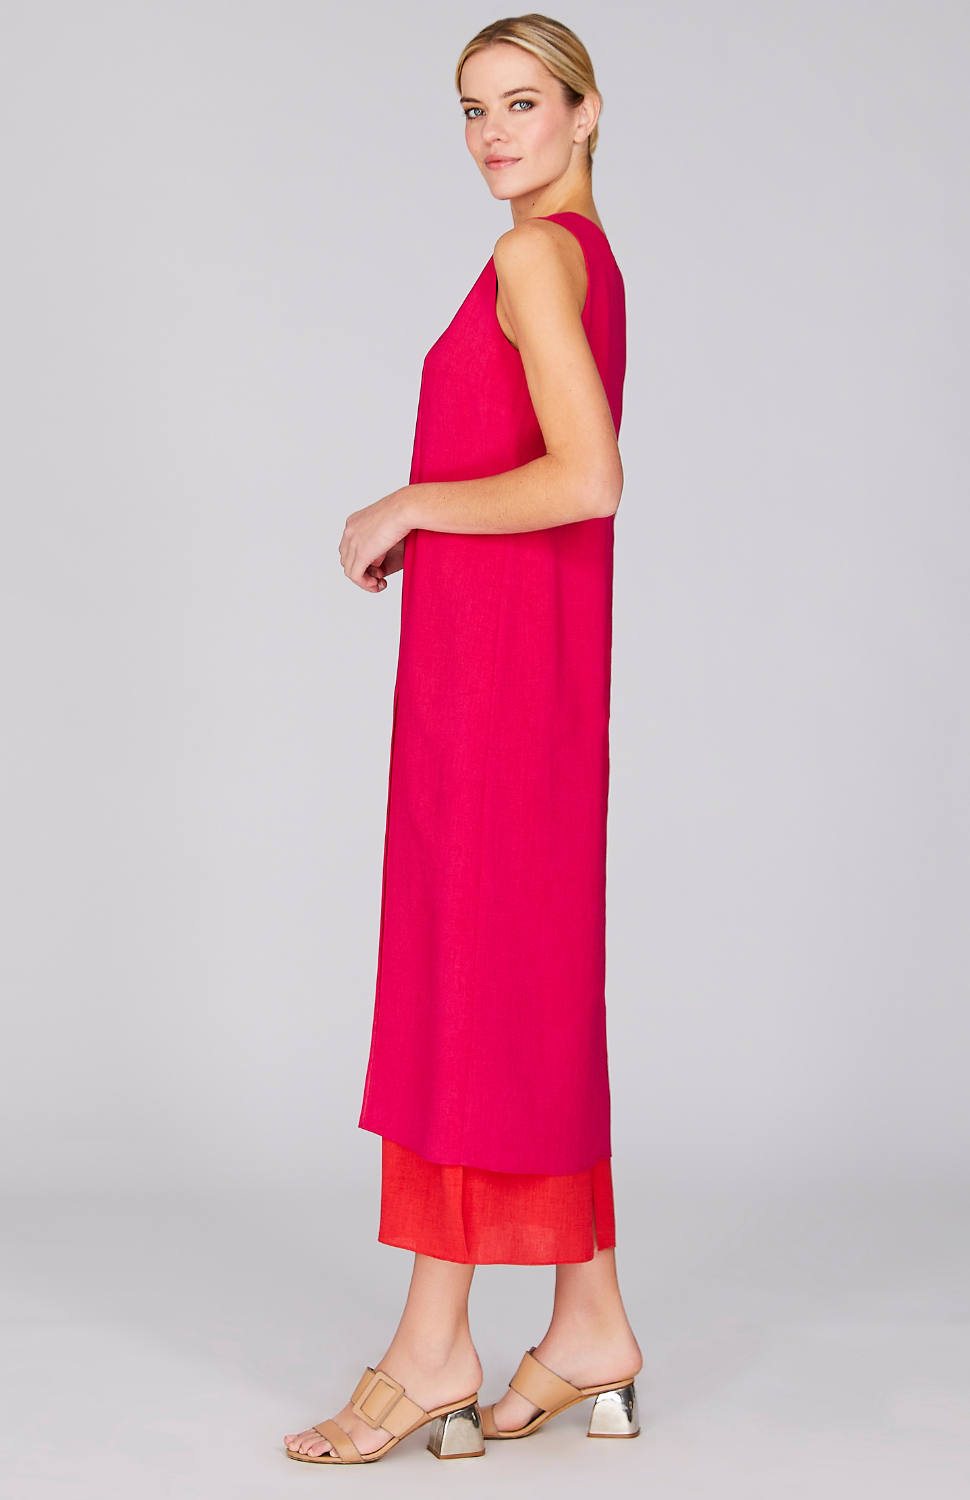 Microlinen Double Layer Dress w/Front Slit